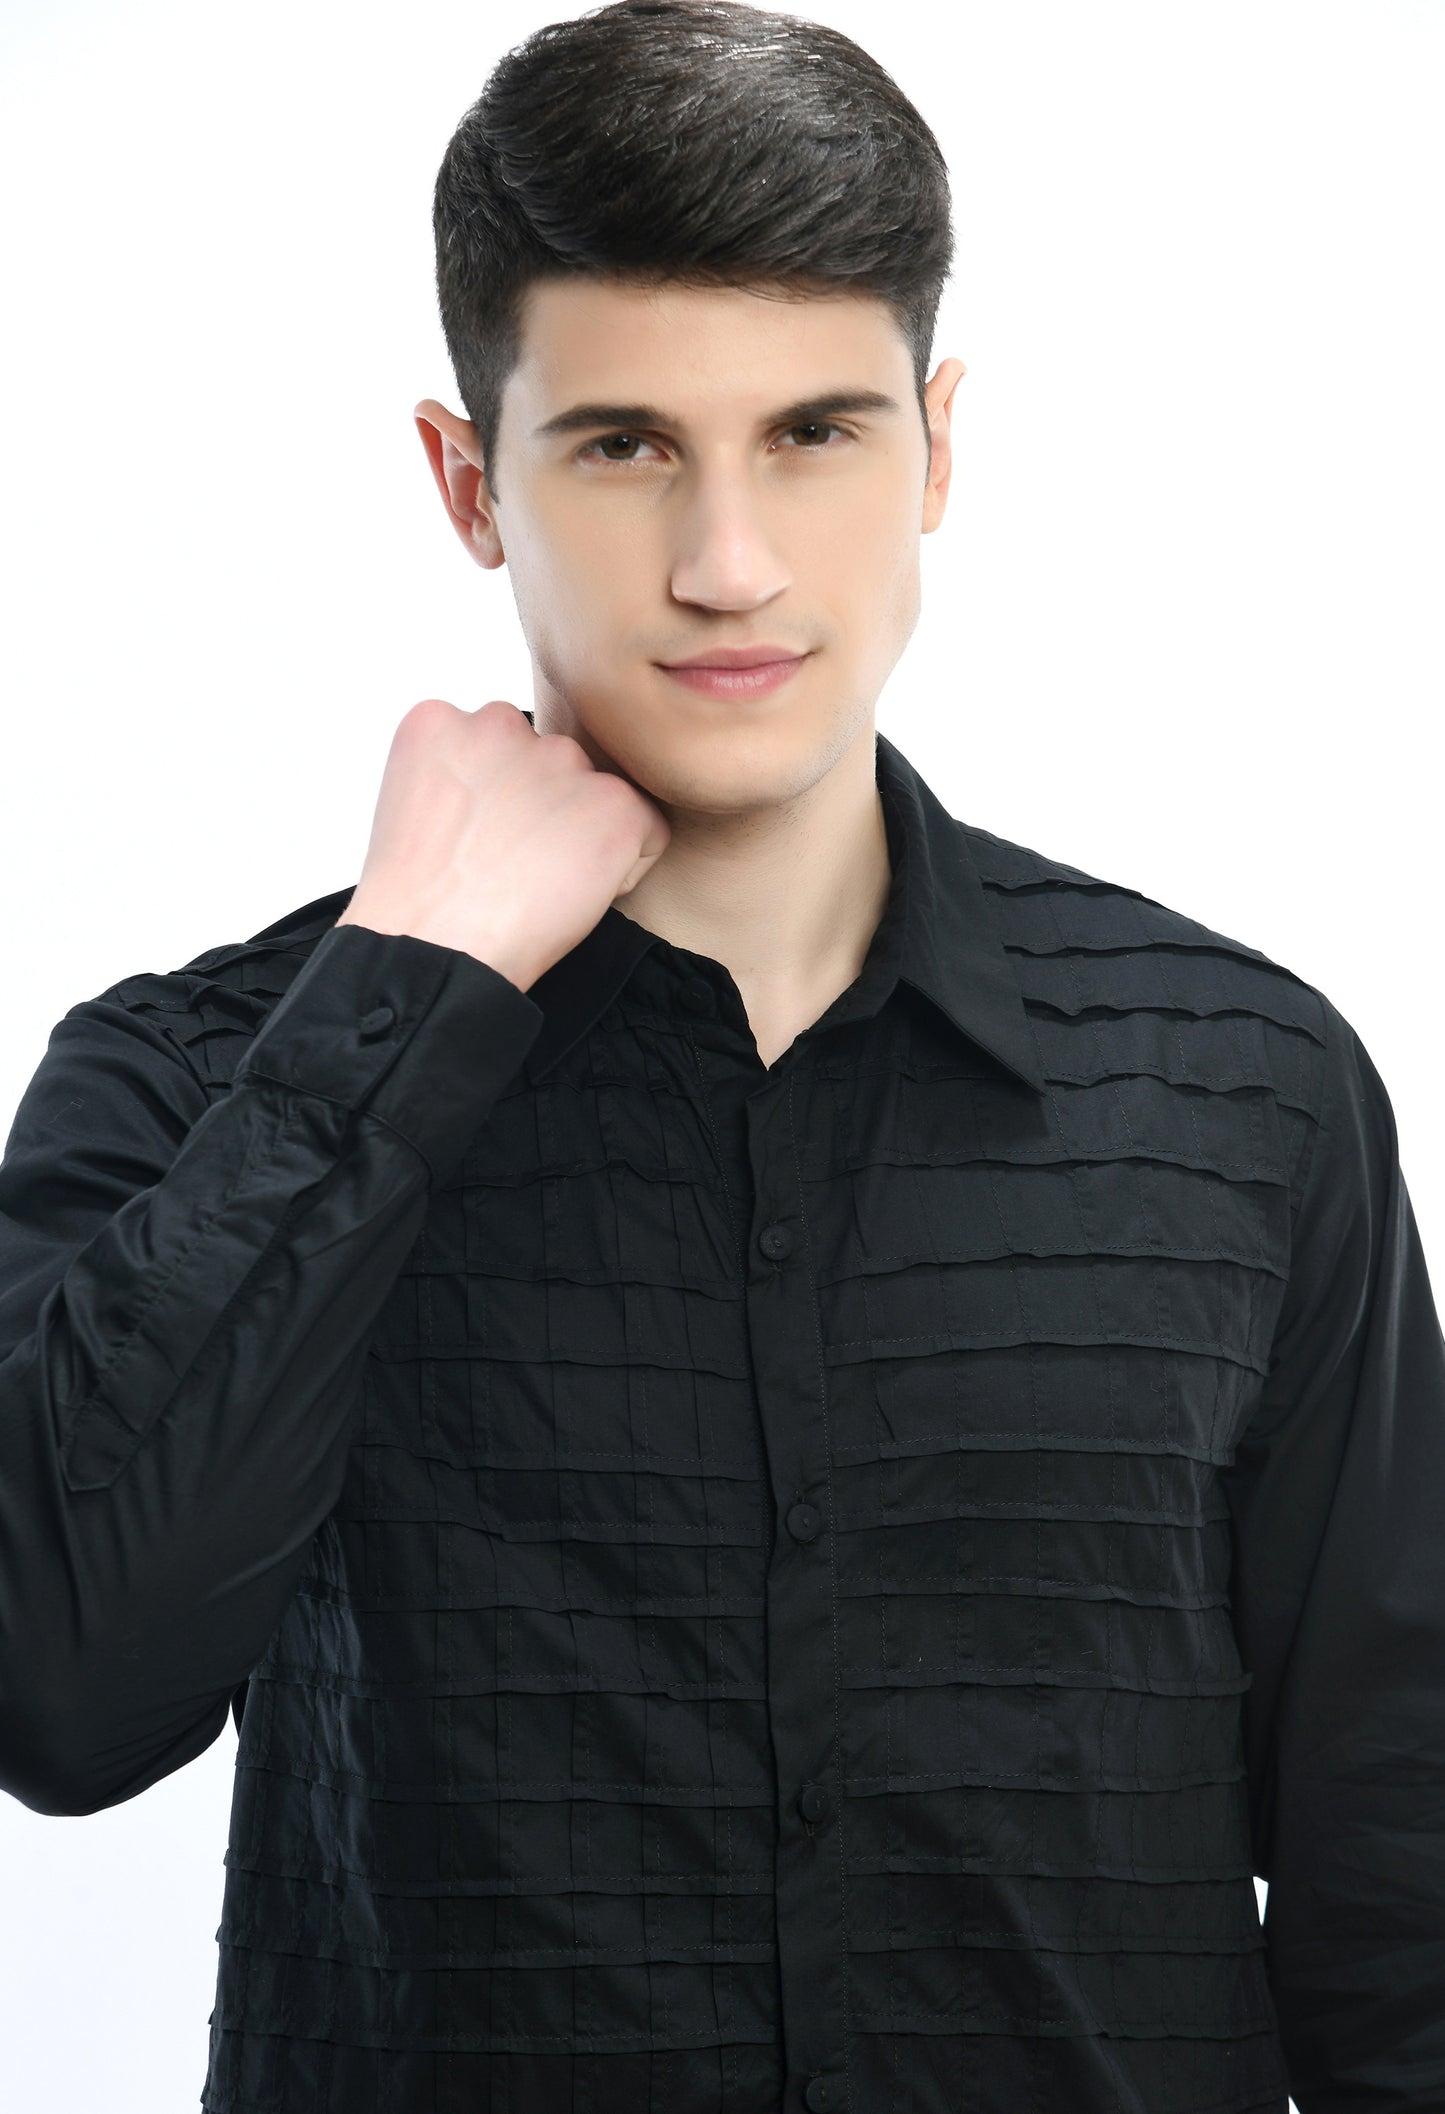 A black cotton shirt showcasing pintex lines creating a tone on tone pattern.